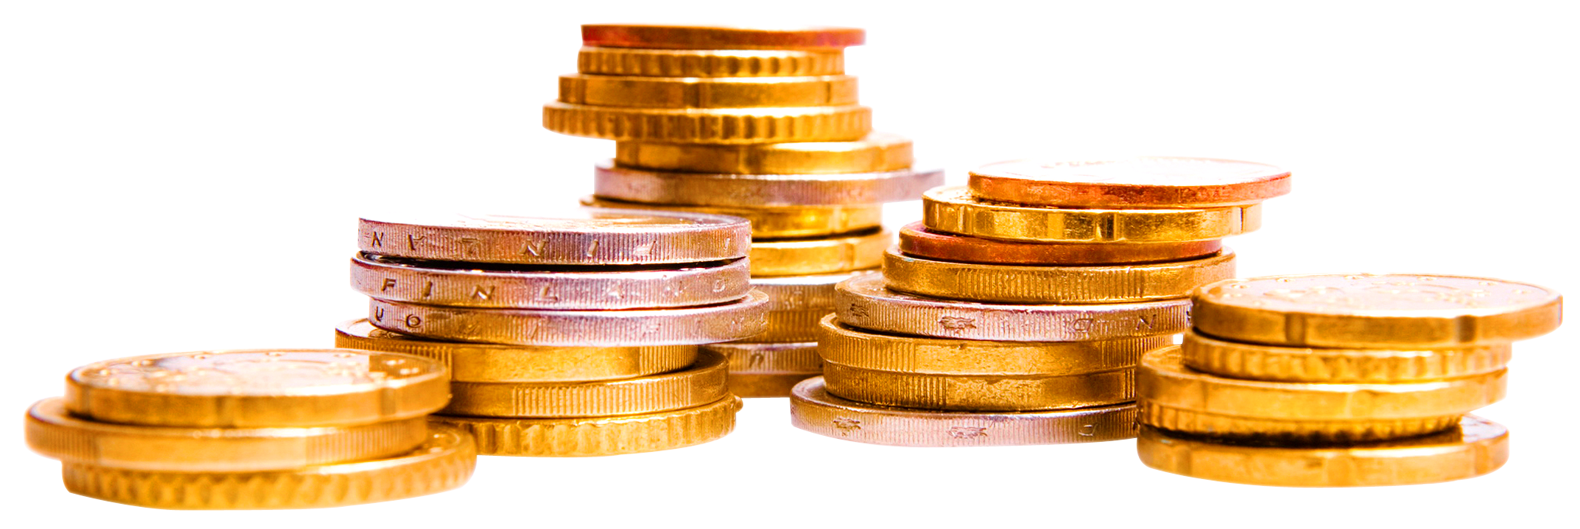 Geld goldene Münzen stapeln PNG-Bild